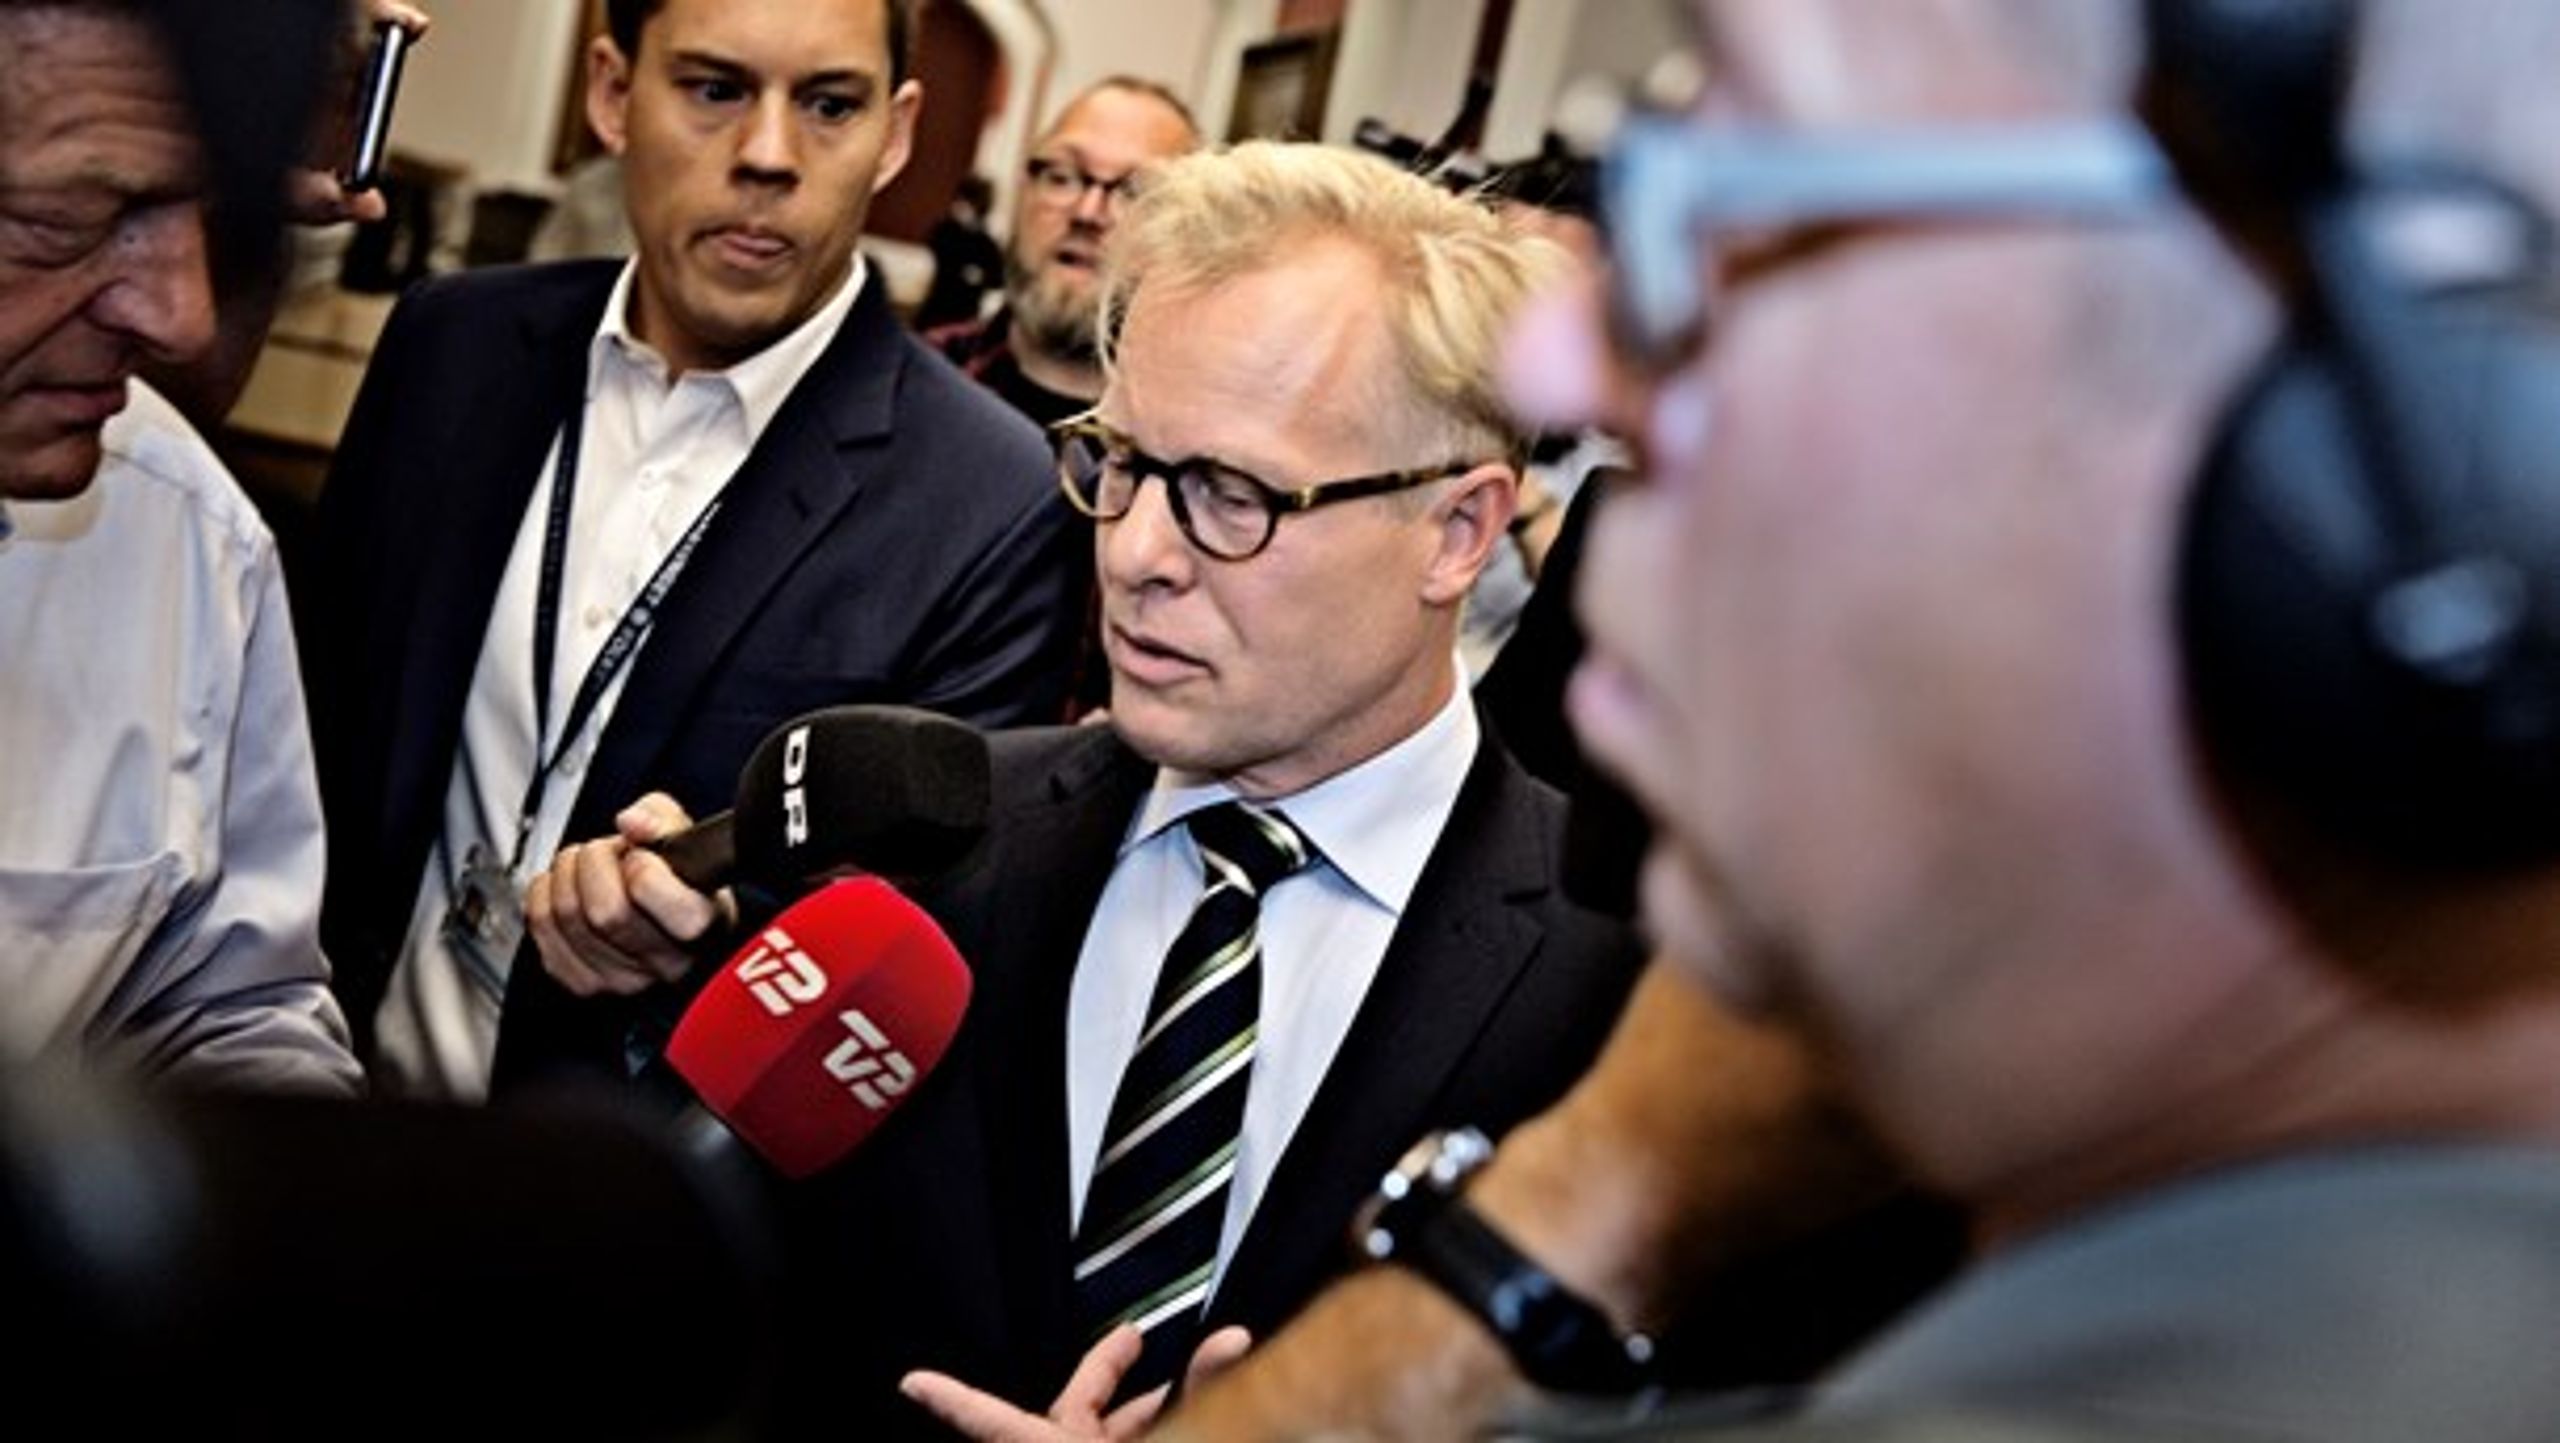 Venstre-politiker Carl Holst trådte i september 2015 tilbage som forsvarsminister efter en større politisk storm om hans fortid som regionsrådsformand i Region Syddanmark.